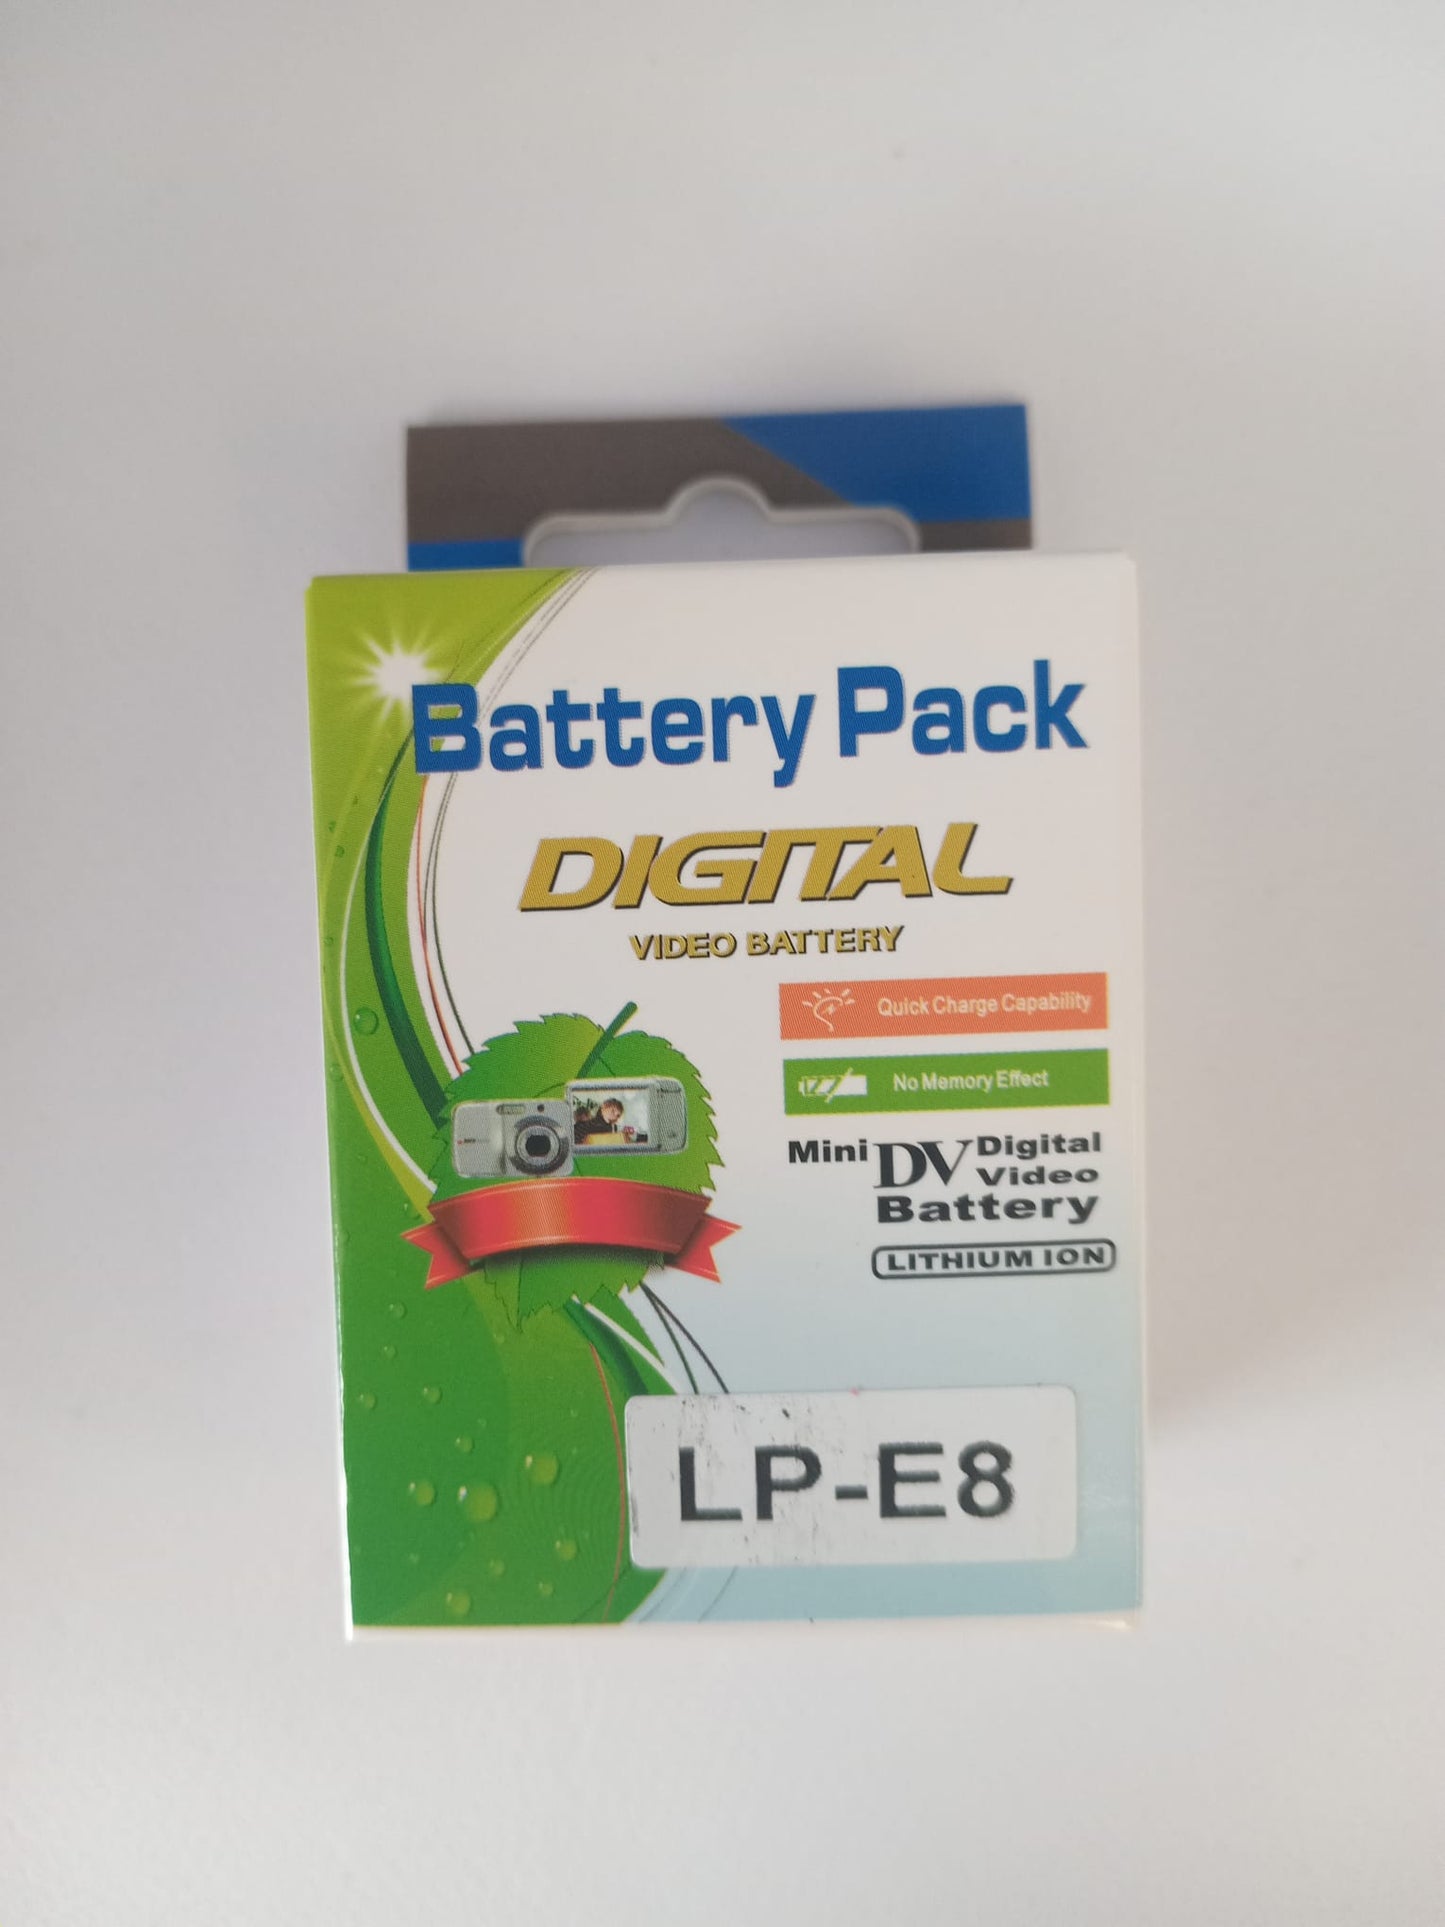 Digital video camera battery for LP-E8